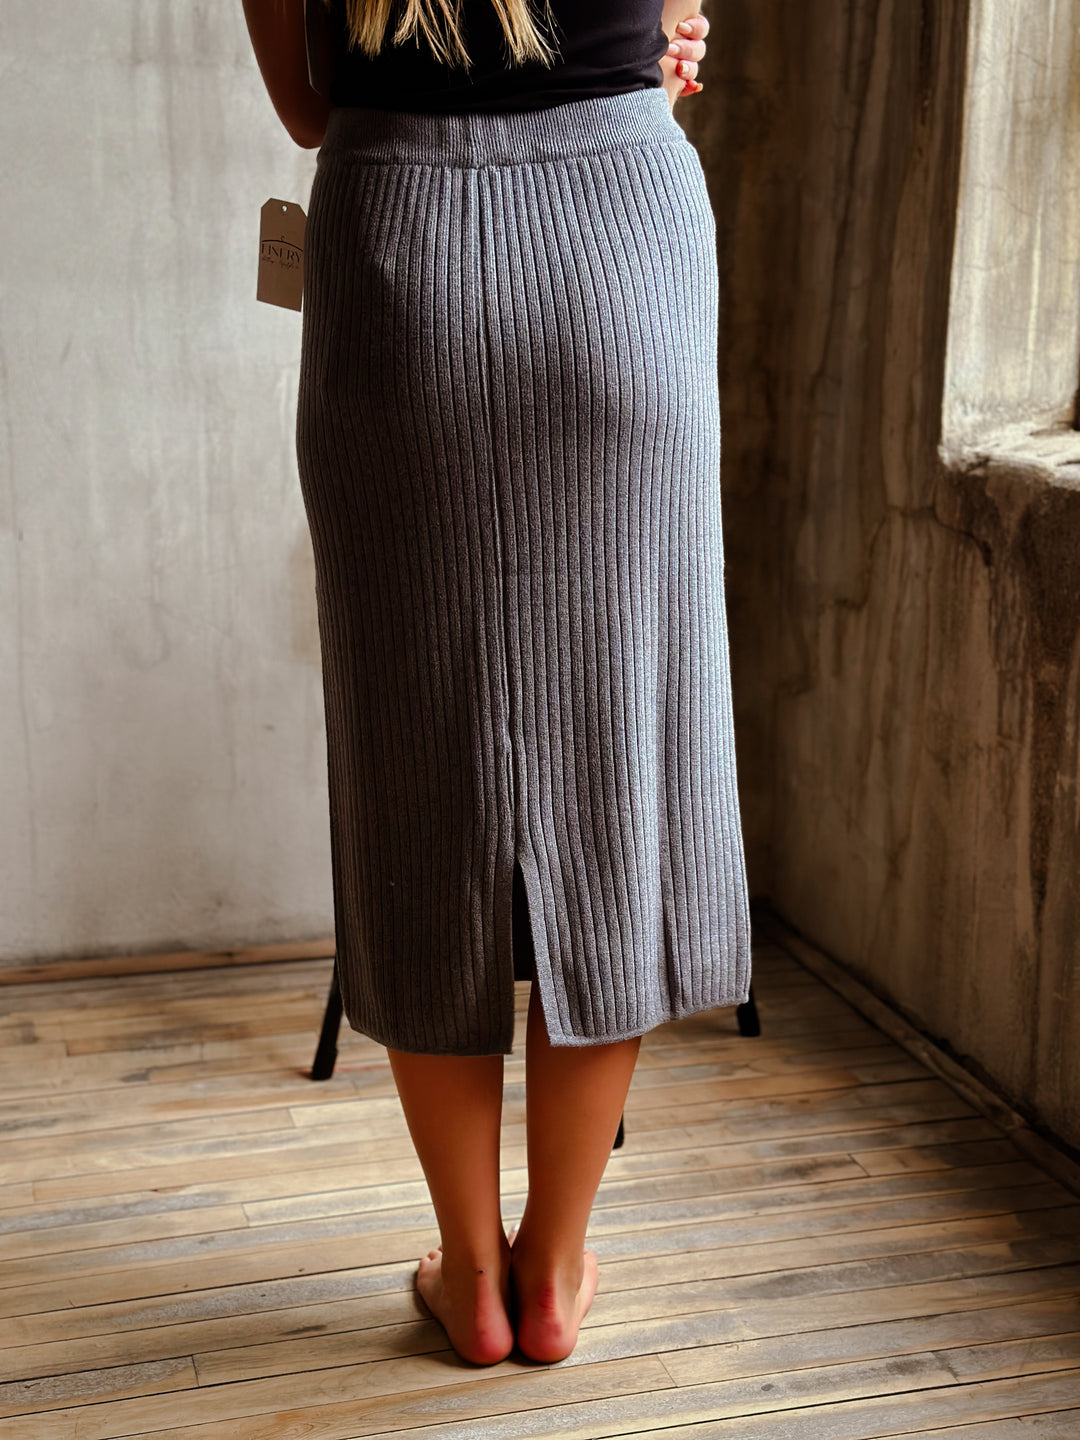 Great Ways Sweater Skirt